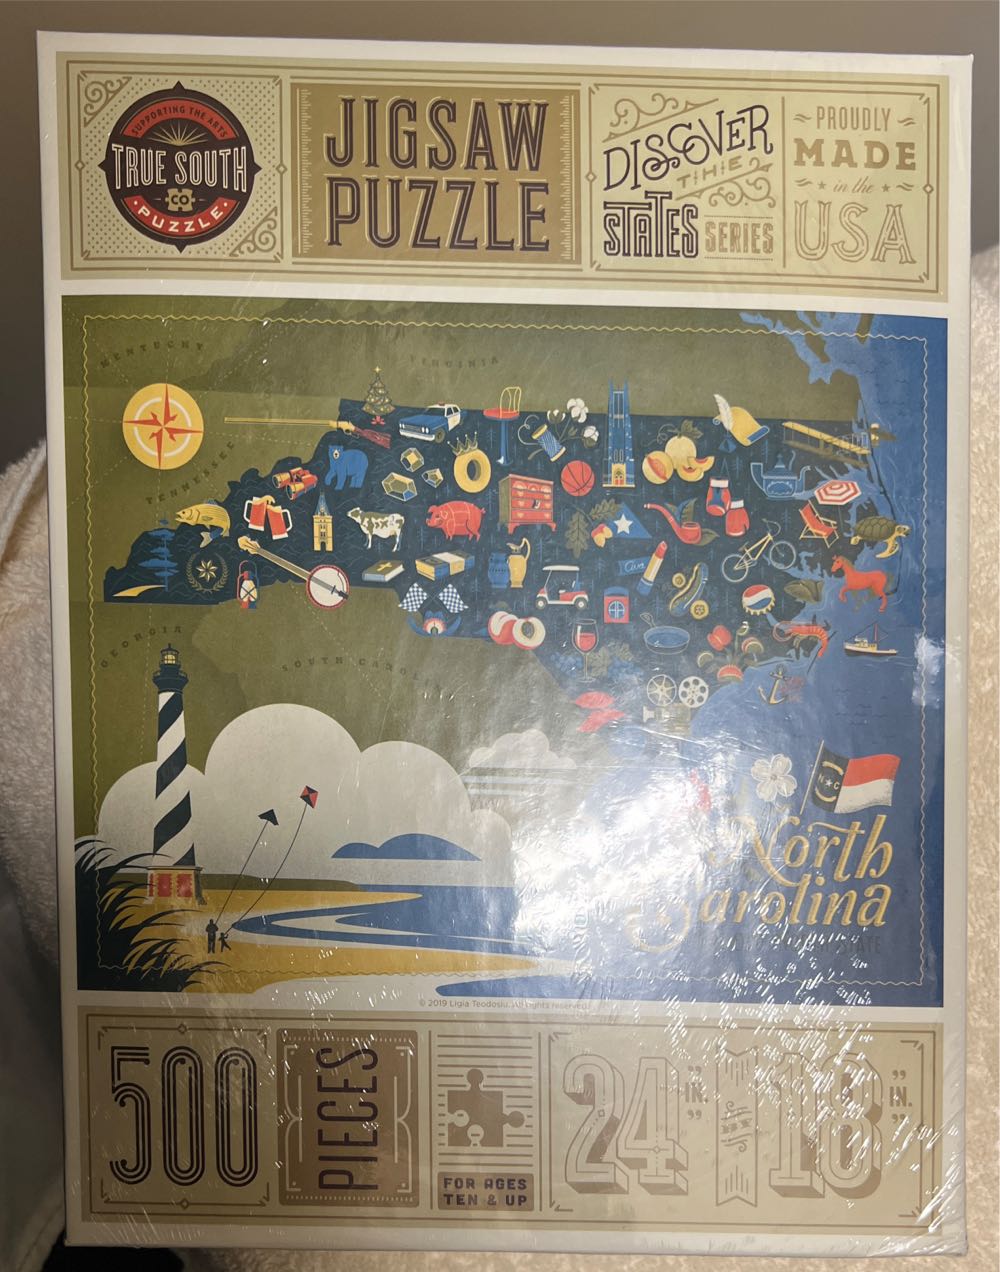 True South North Carolina - True South puzzle collectible [Barcode 736211905284] - Main Image 1